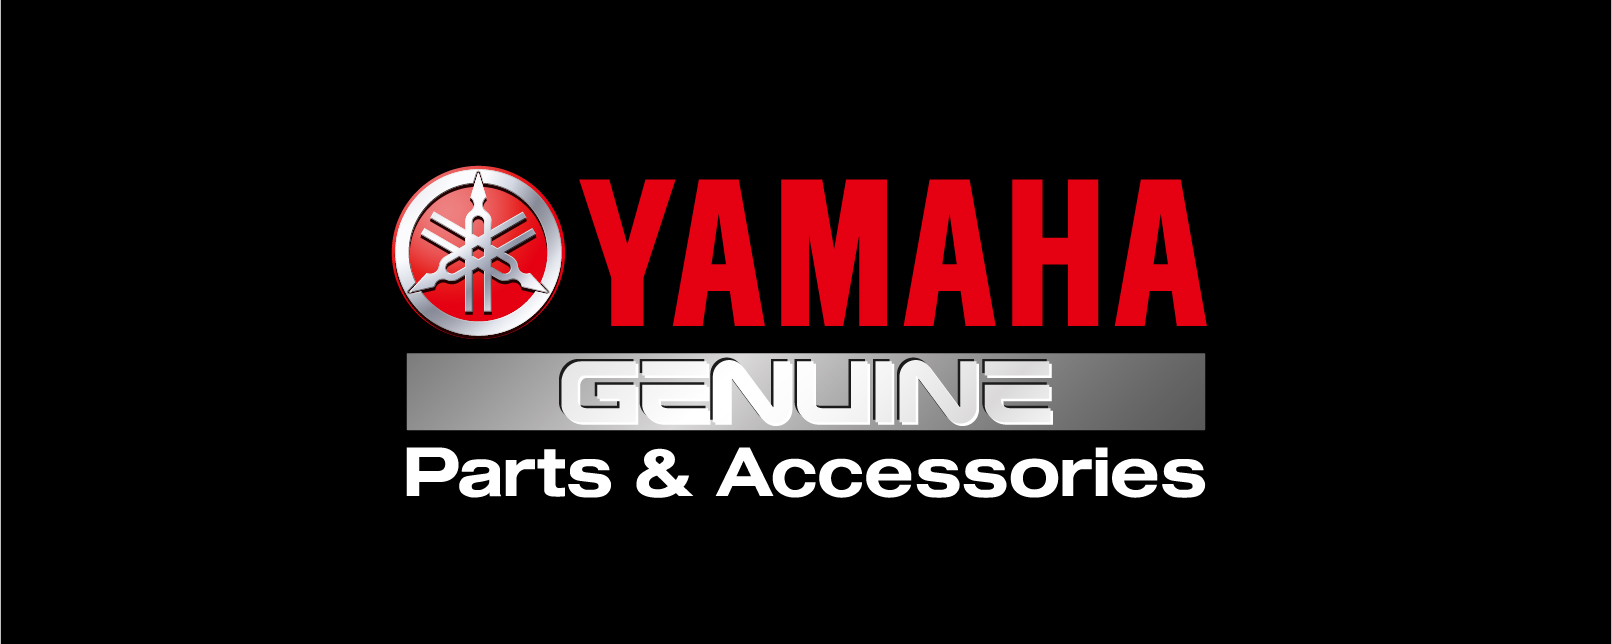 YAMAHA GENUINE Parts & Accessories